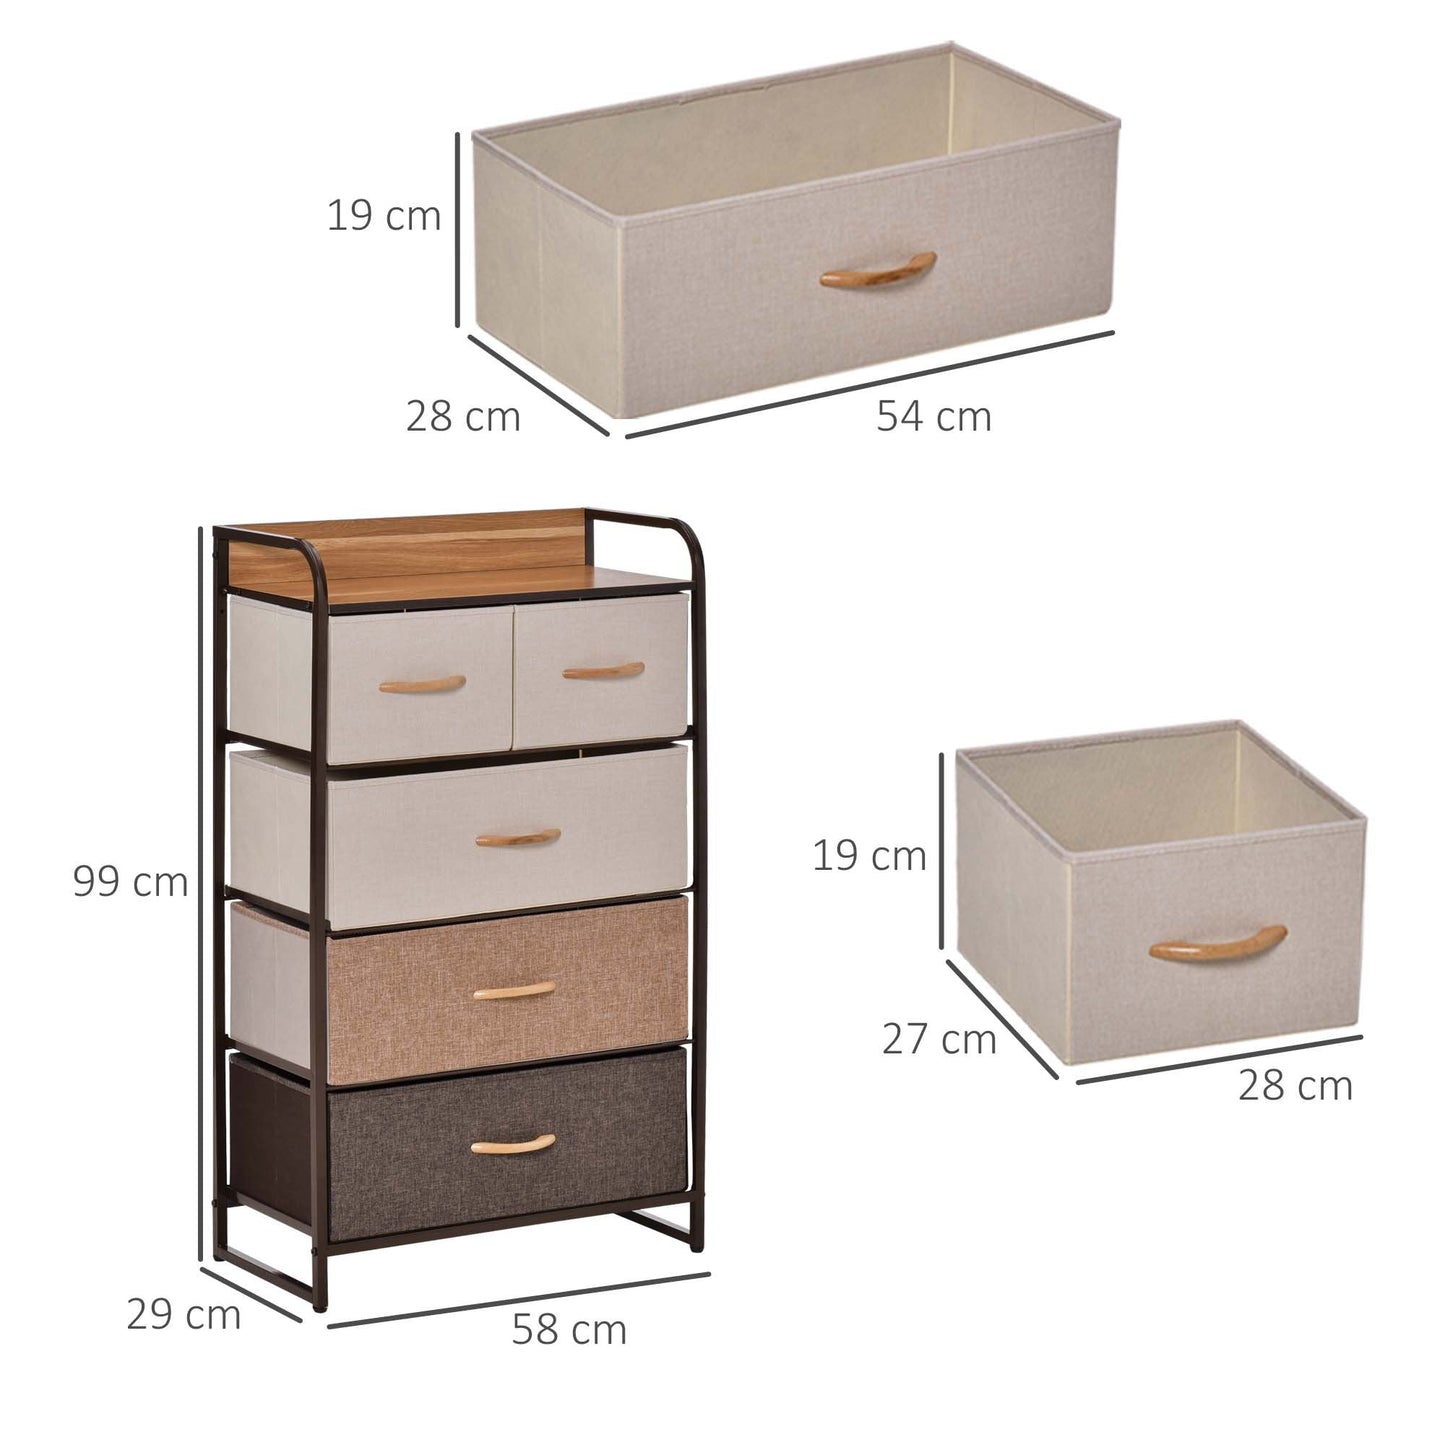 HOMCOM 5-Drawer Dresser Tower 3-Tier Storage Organizer with Steel Frame Wooden Top for Bedroom Hallway Closets